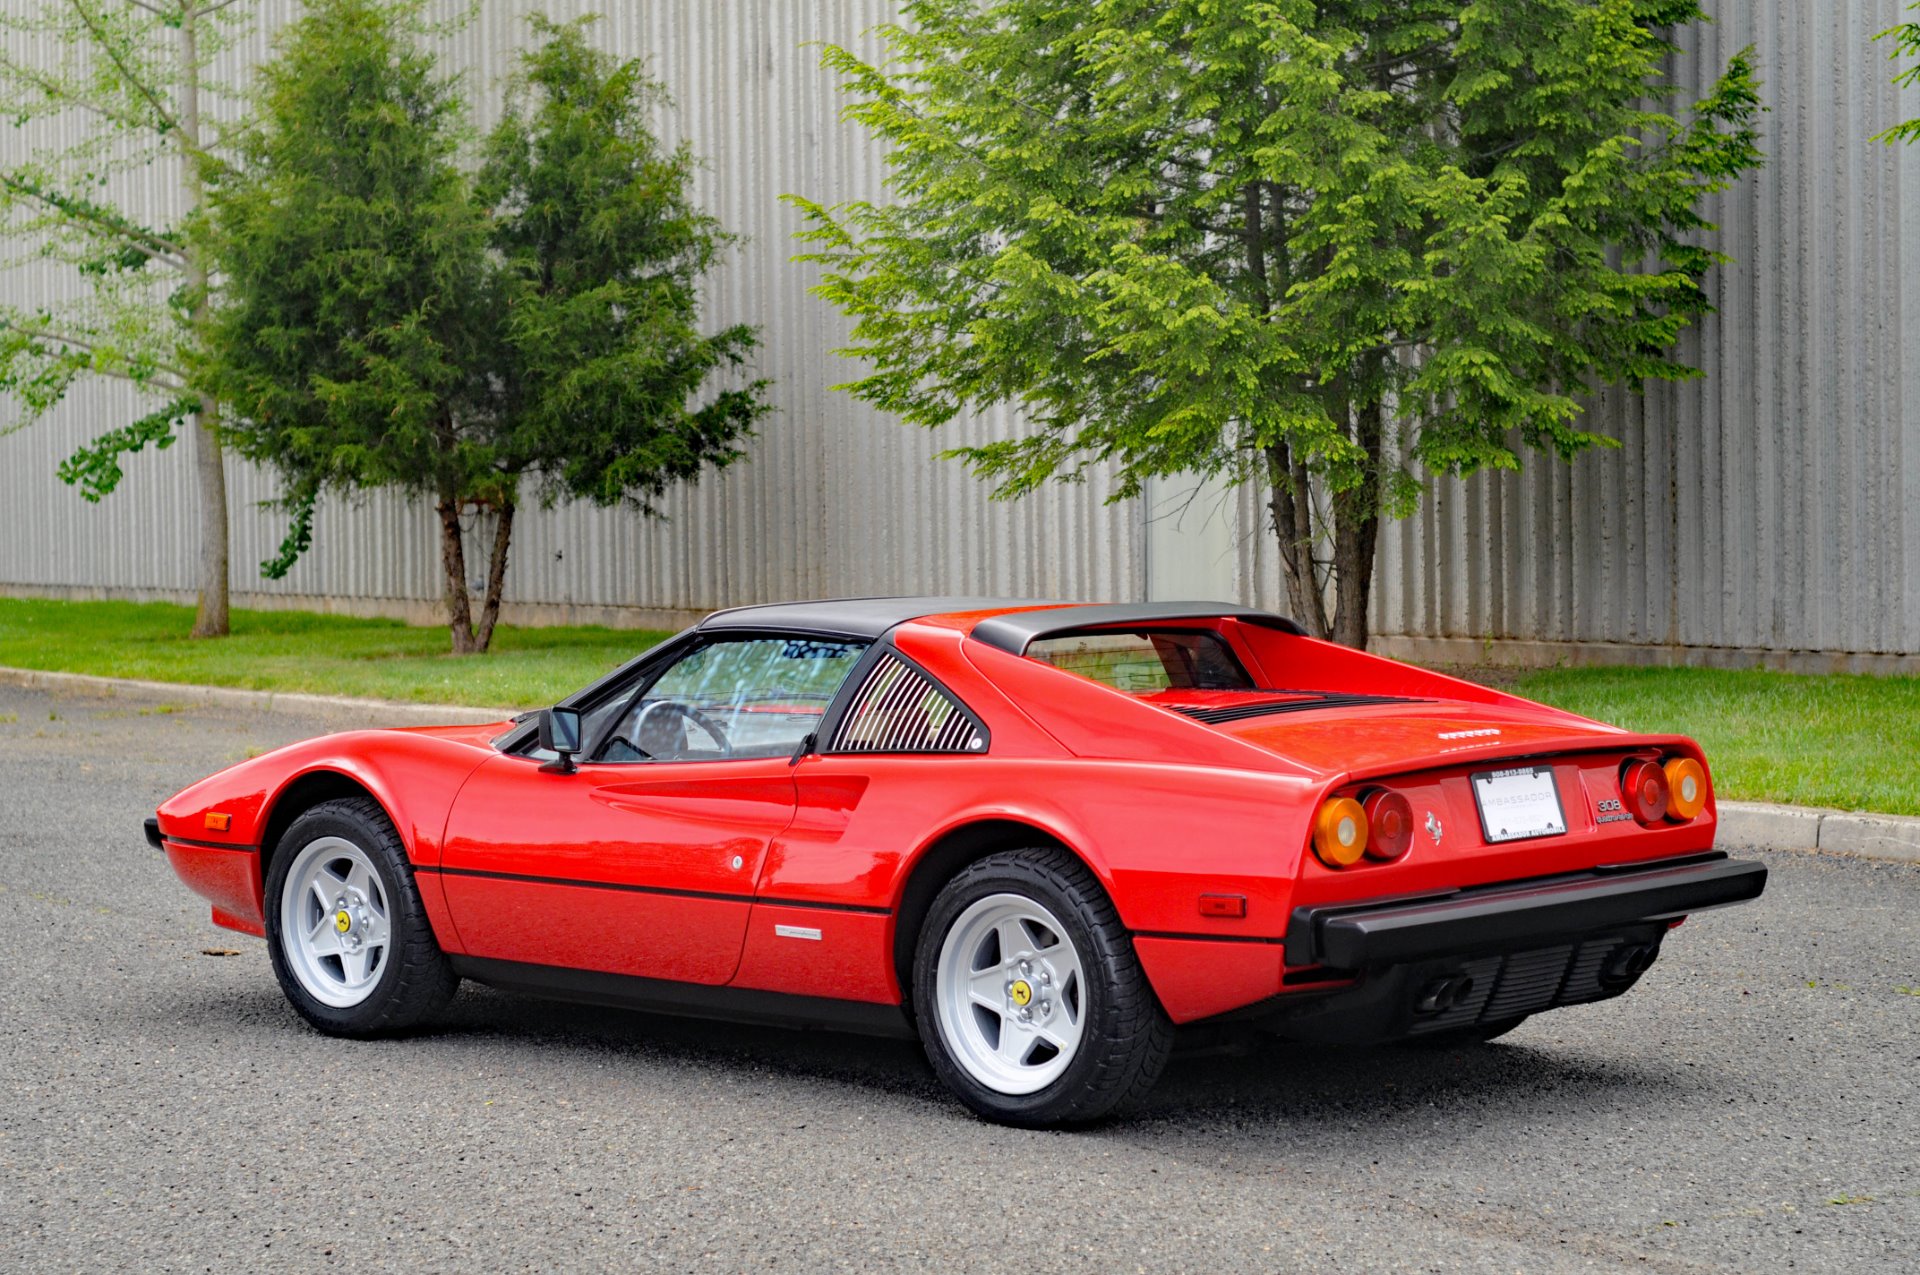 Used 1983 Ferrari 308 Gts Qv For Sale Special Pricing Ambassador Automobile Llc Stock 186